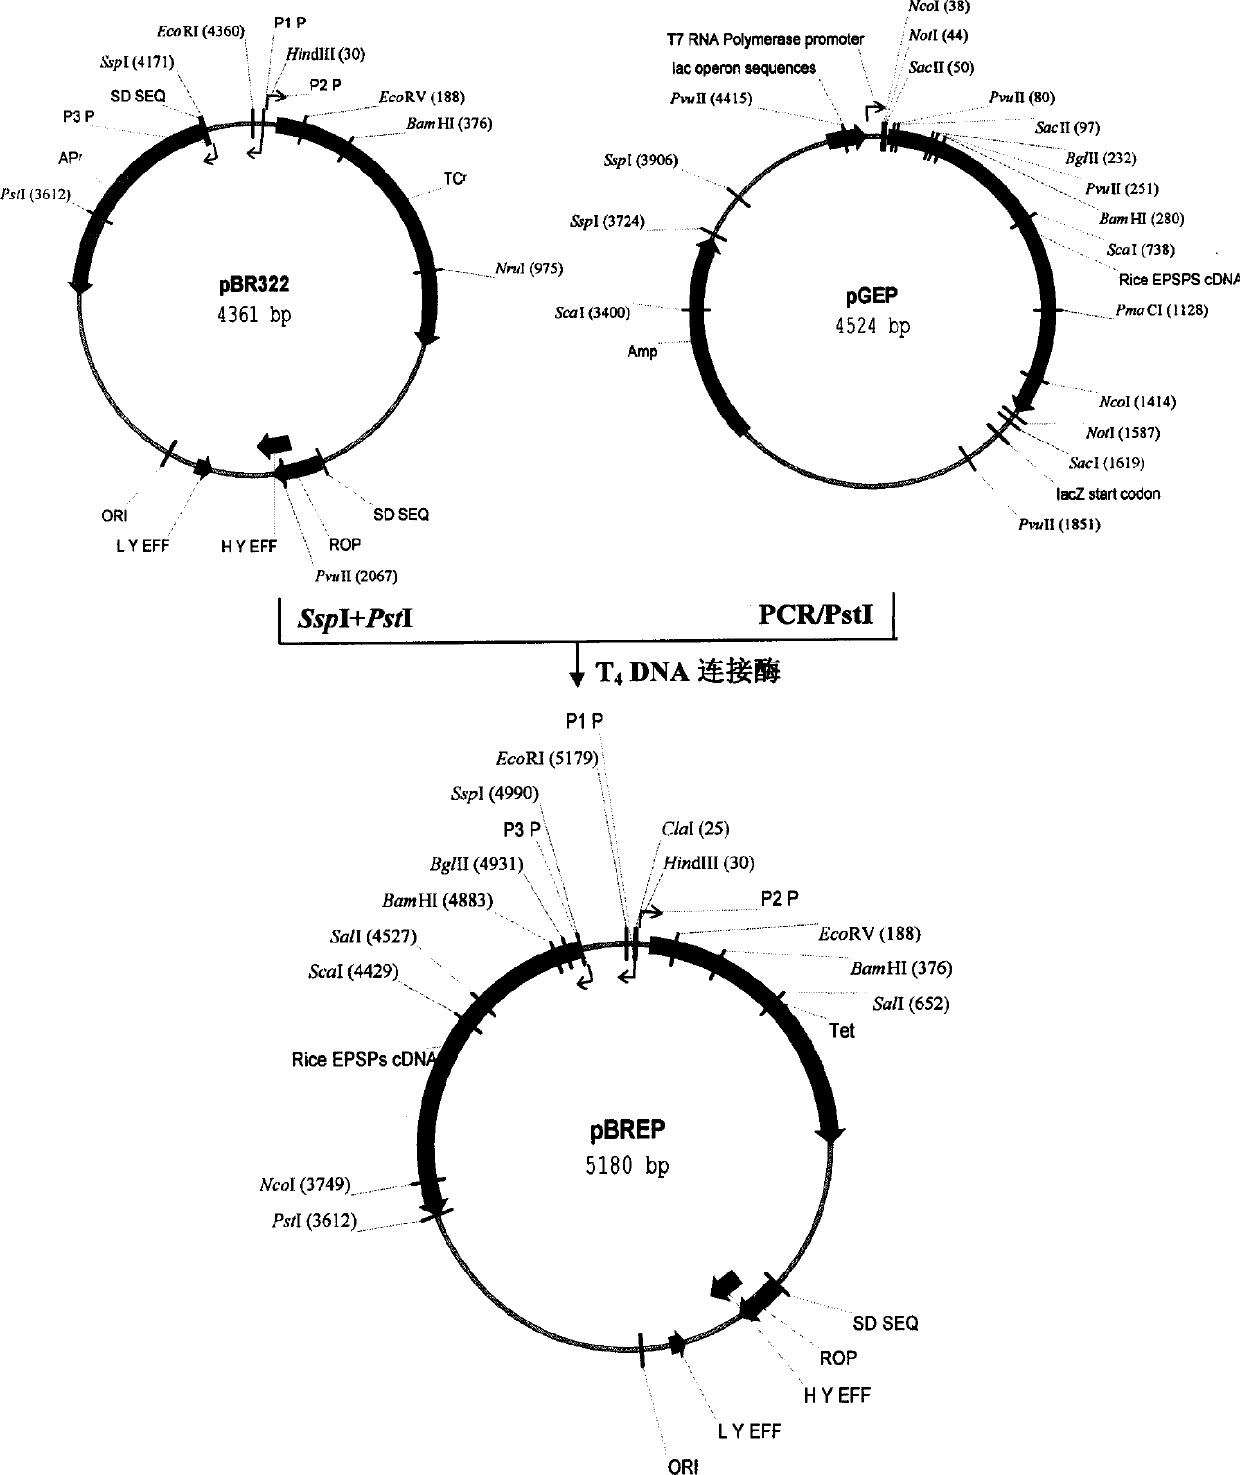 Rice EPSP synthase mutant and its coding gene, obtaining method and application